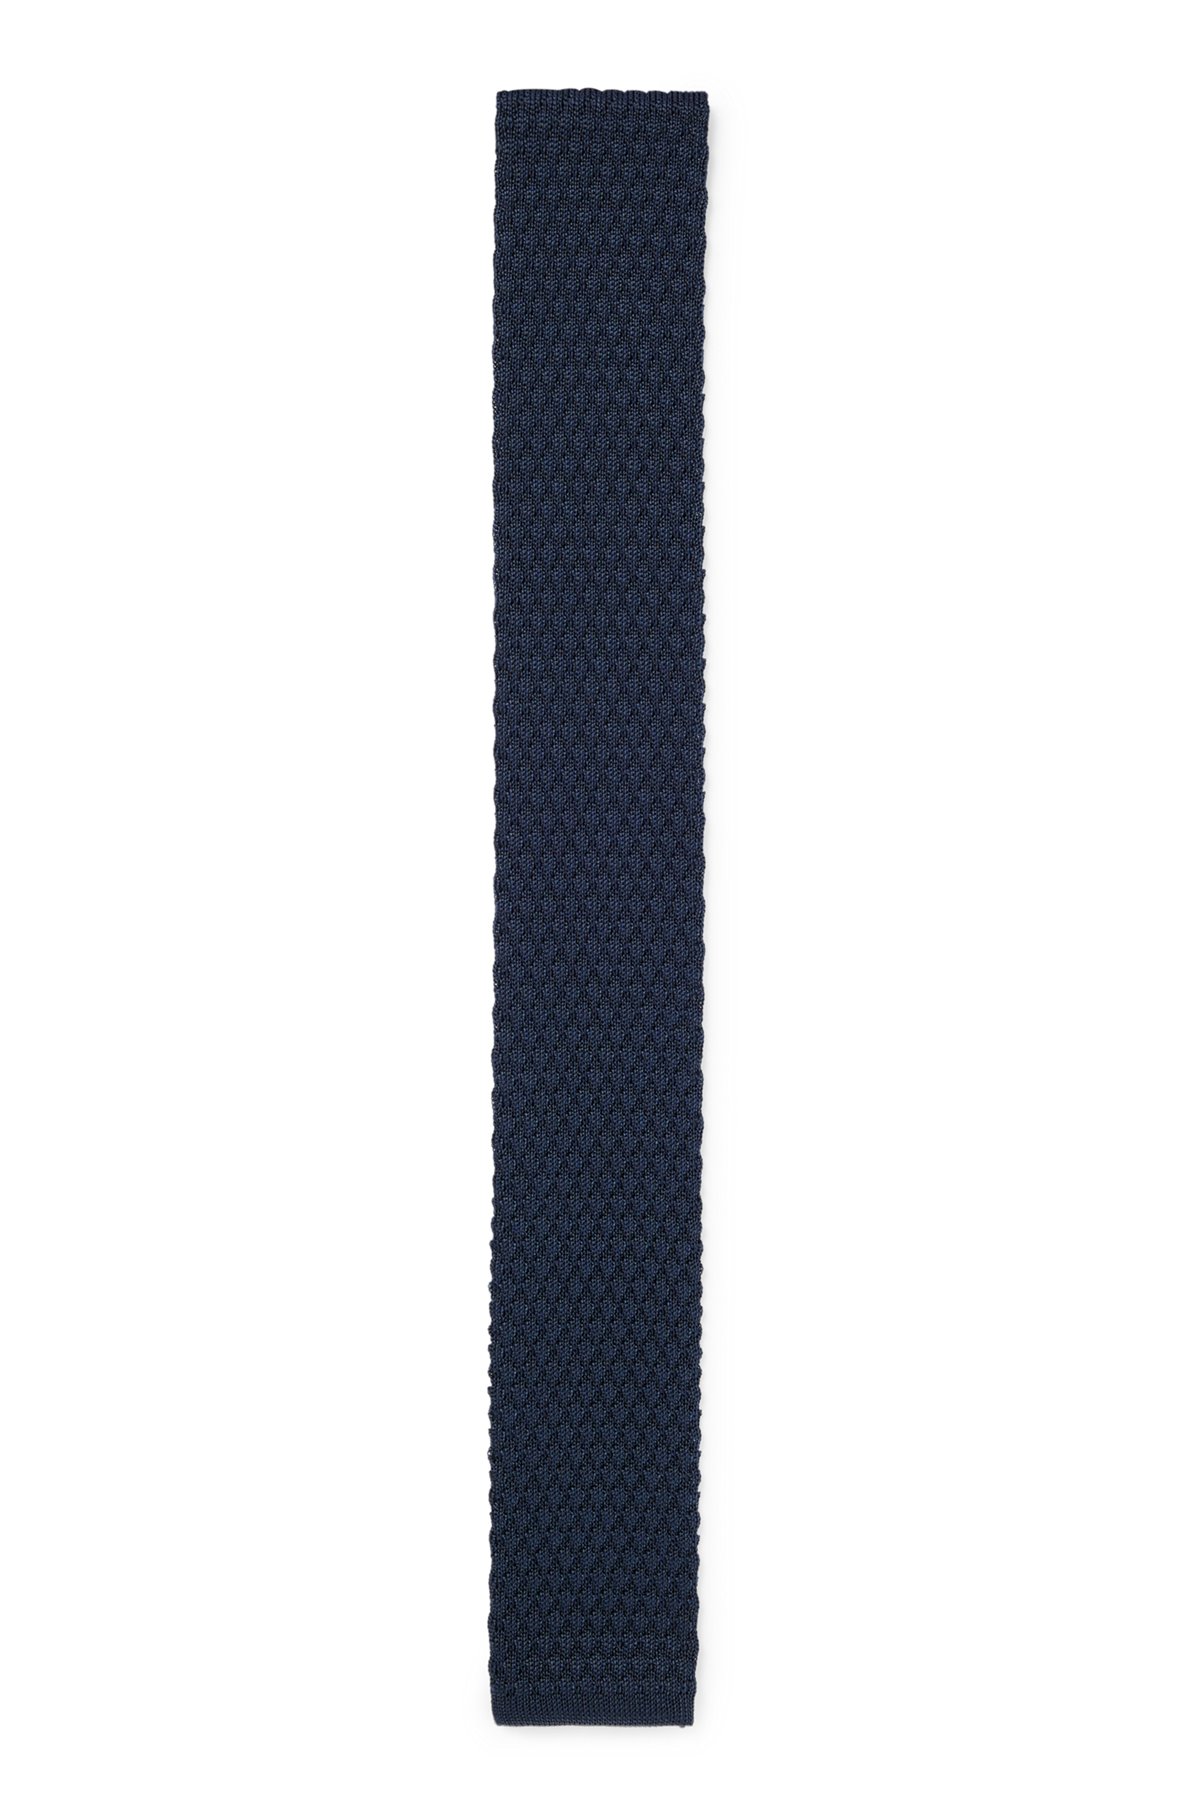 BOSS - Krawatte aus reiner Seide mit Jacquard-Struktur